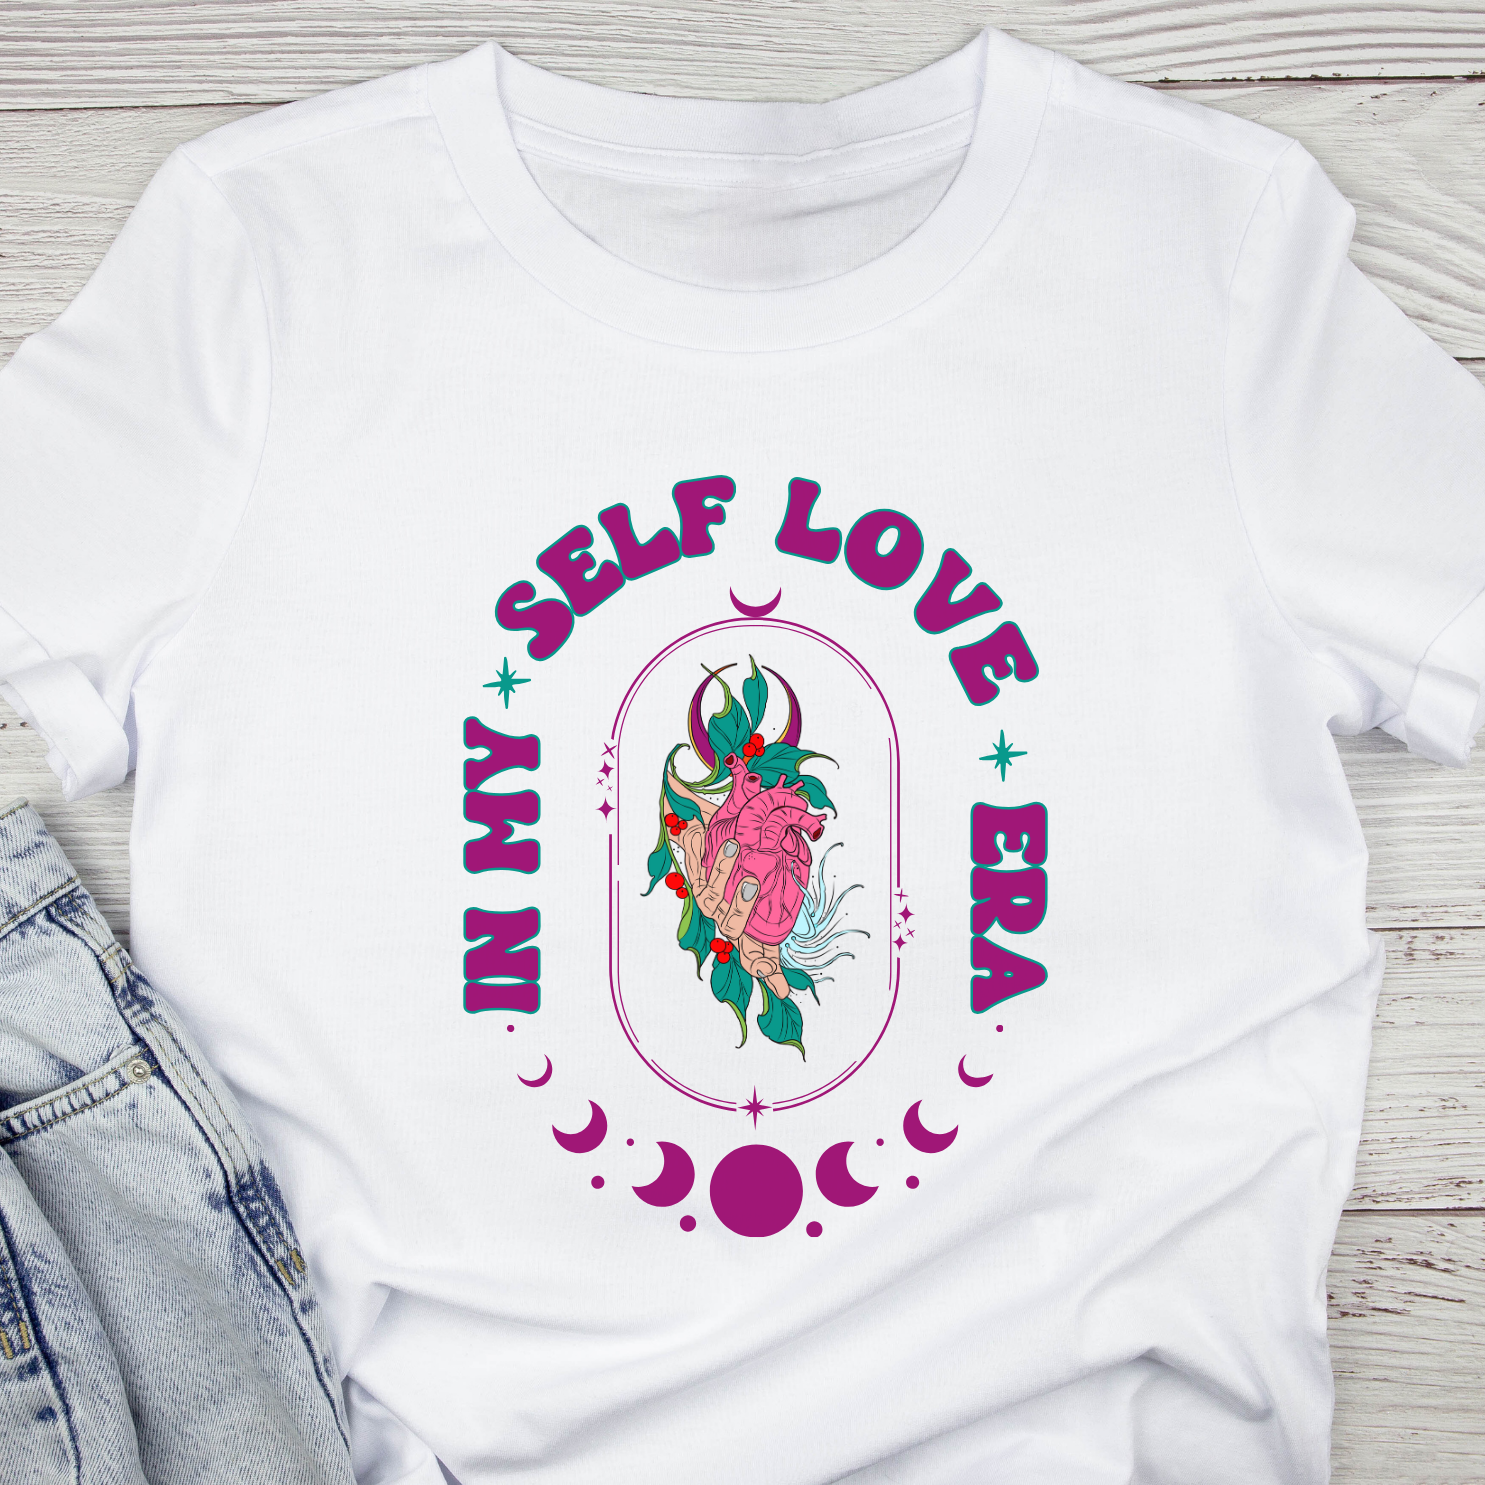 In my Self Love Era T-shirt